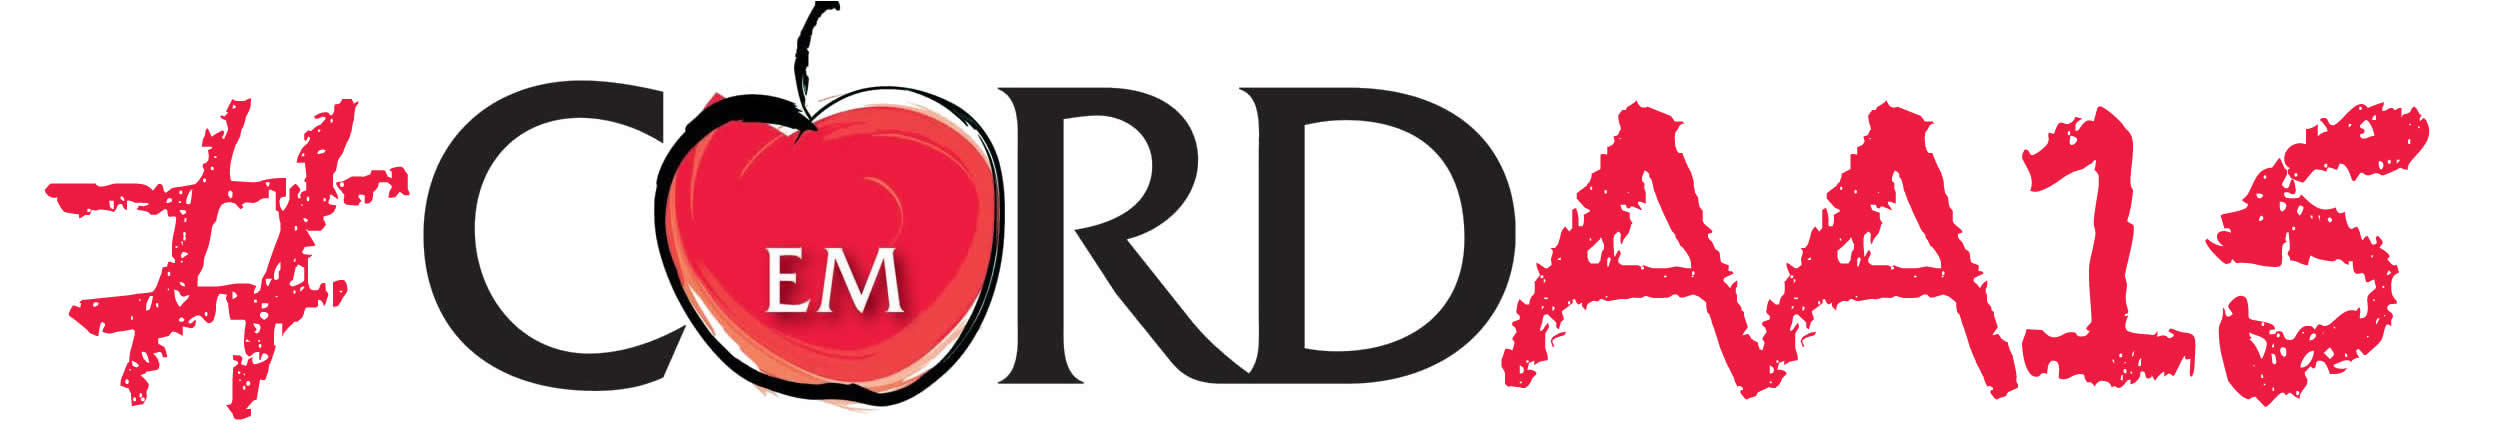 CORD-Logo-Hashtag